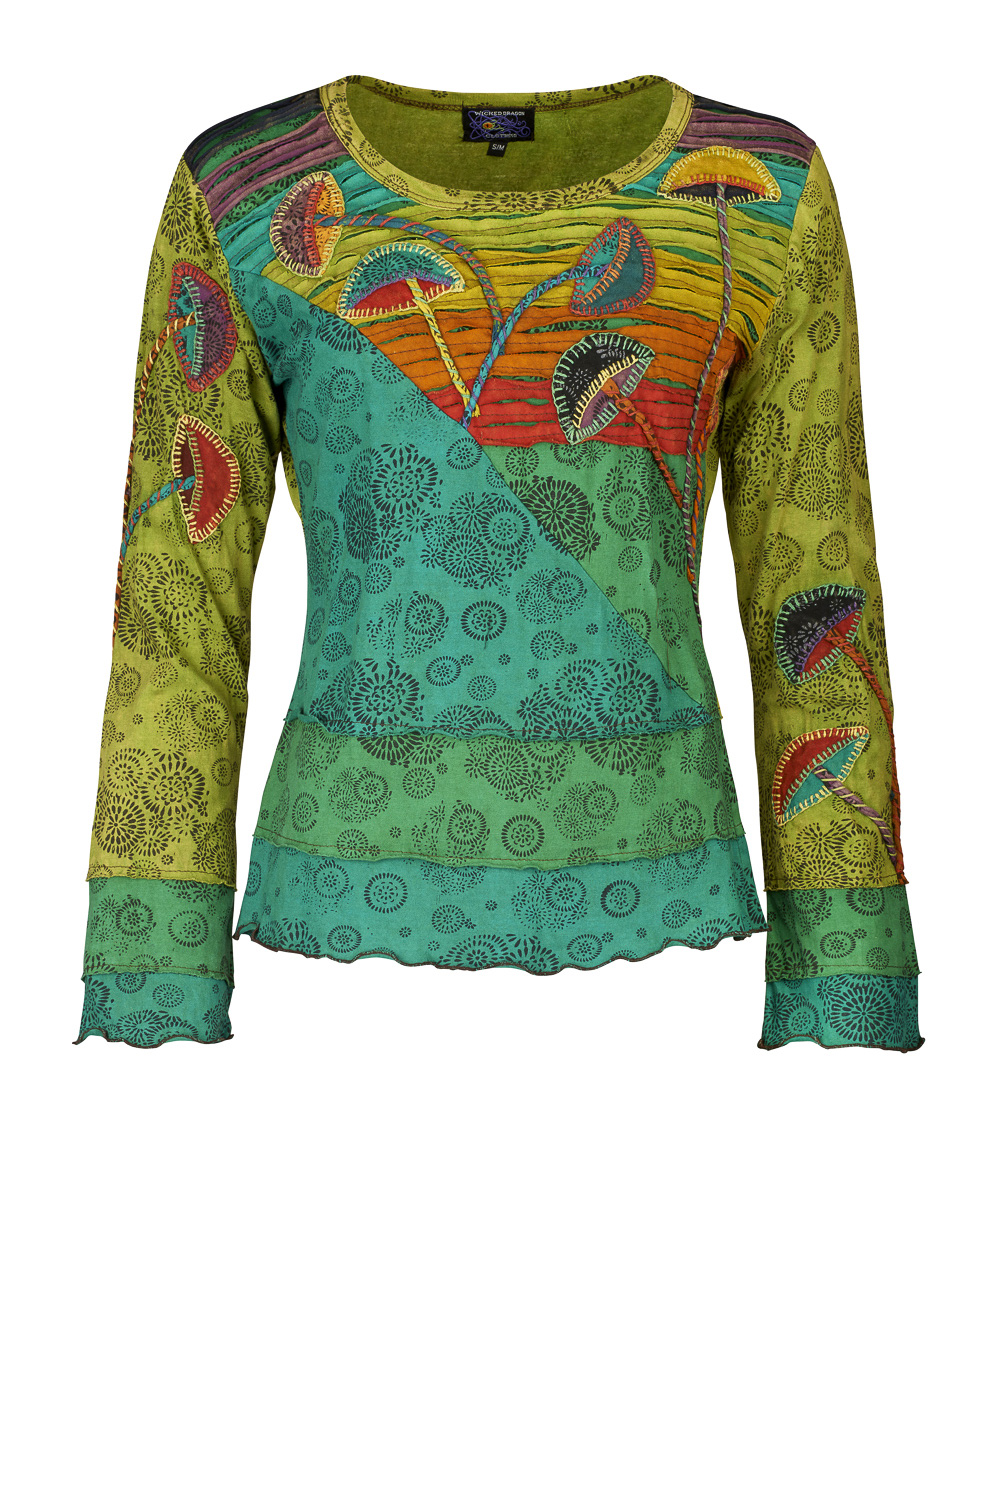 Wicked Dragon Clothing - Mushroom long sleeve top